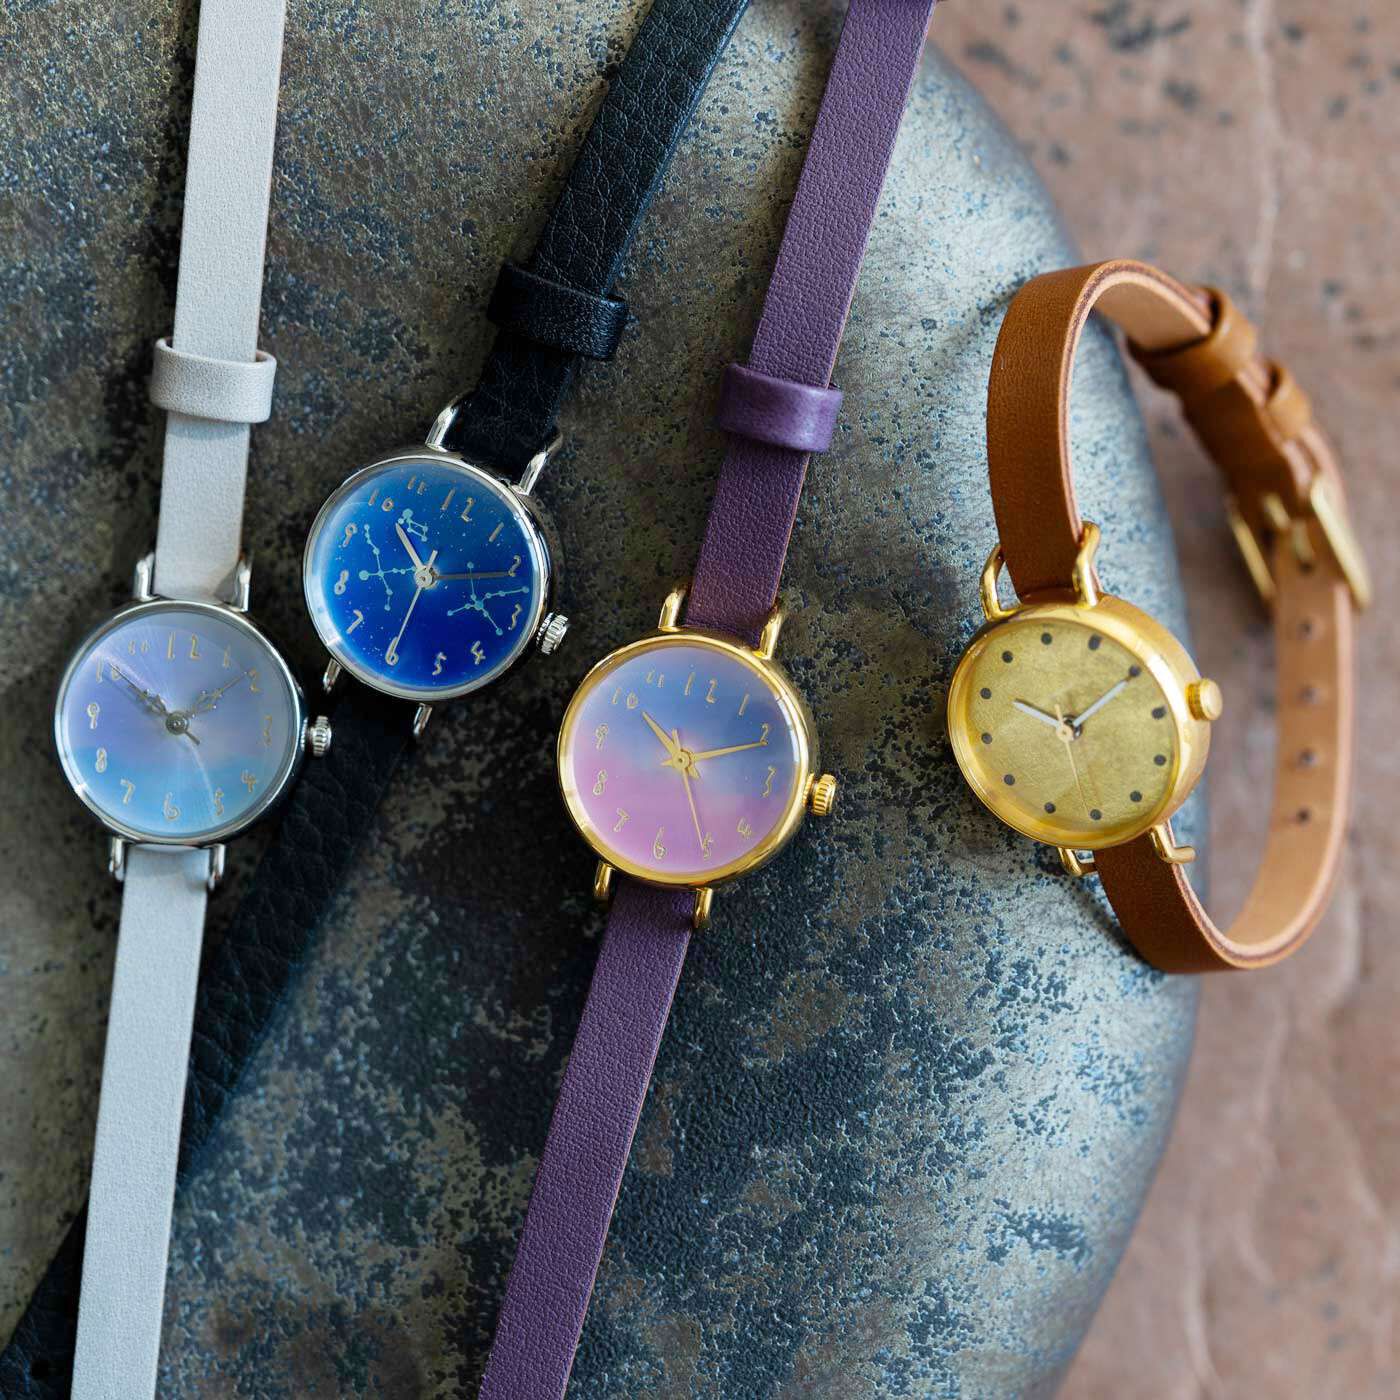 ＆Stories|金沢の時計職人が手掛けた　夏の星座に見惚れる腕時計〈ブラック〉|職人さんが一点ずつ丁寧に作る、人の手から生まれたあたたかみが感じられる時計です。